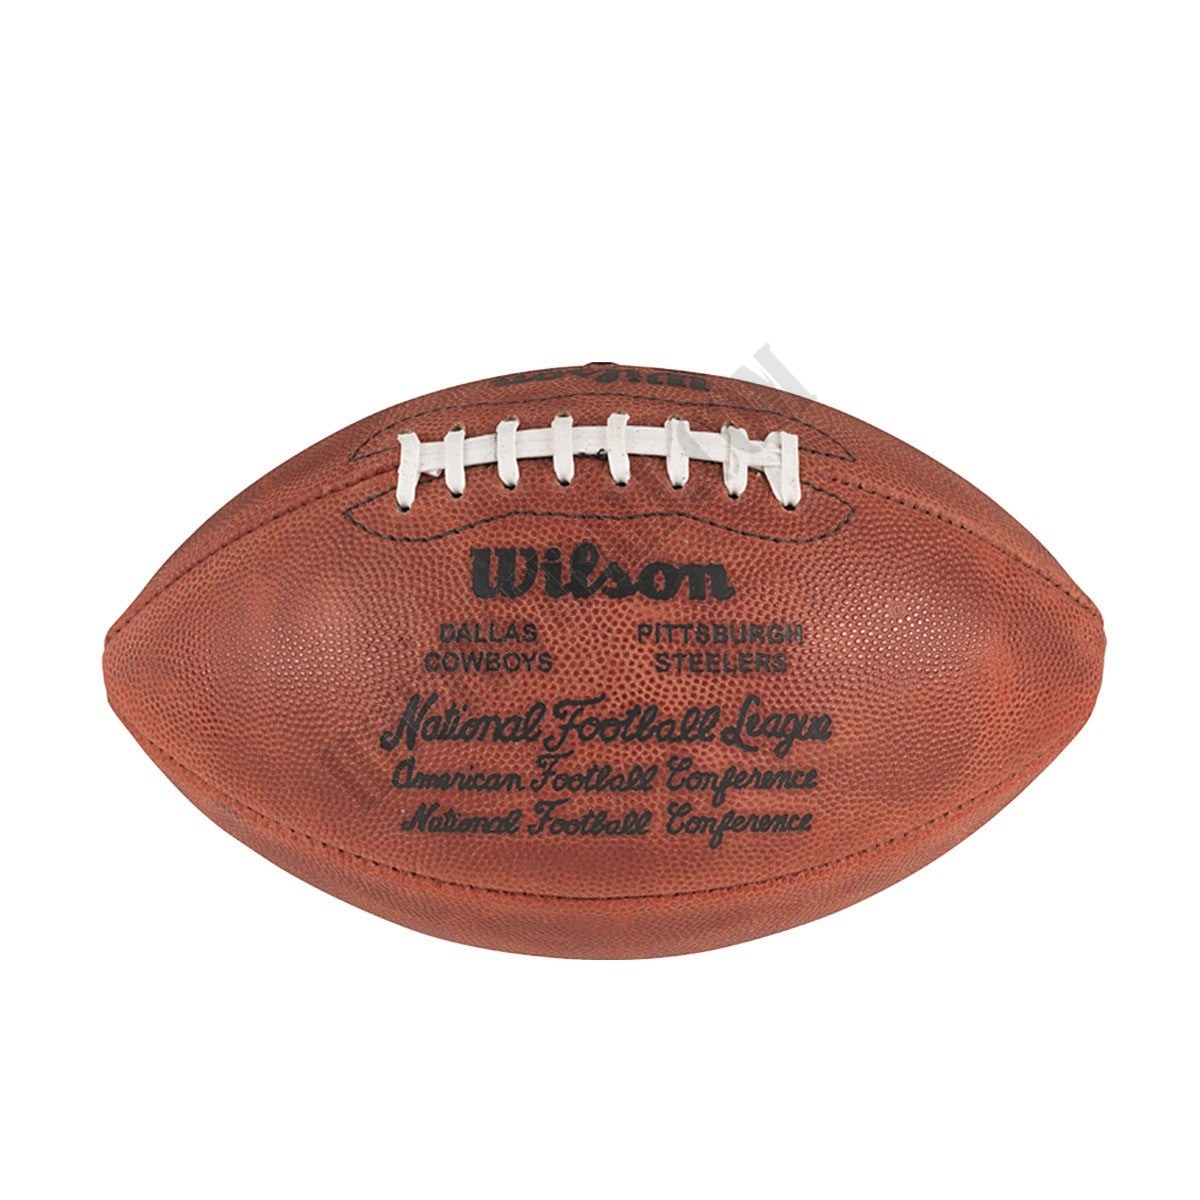 Super Bowl X Game Football - Pittsburgh Steelers ● Wilson Promotions - Super Bowl X Game Football - Pittsburgh Steelers ● Wilson Promotions